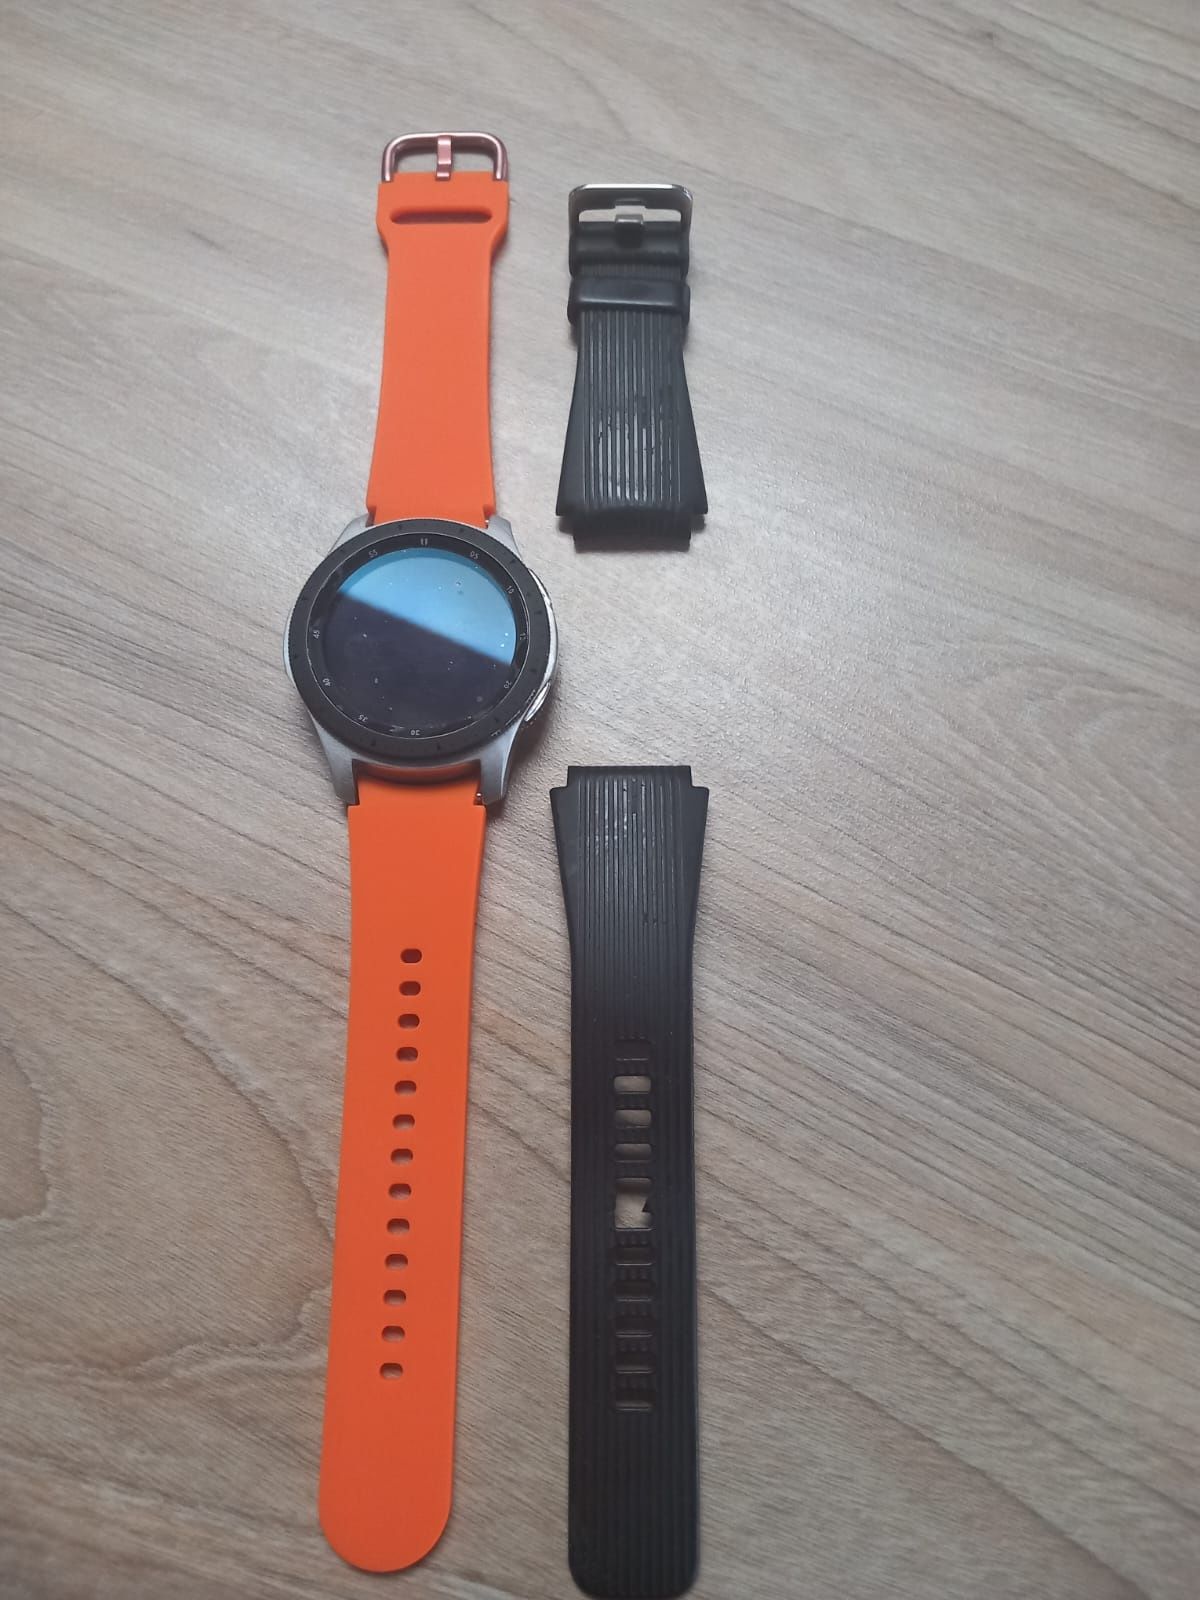 Smartwatch Samsung Galaxy Watch 46 mm + bonus